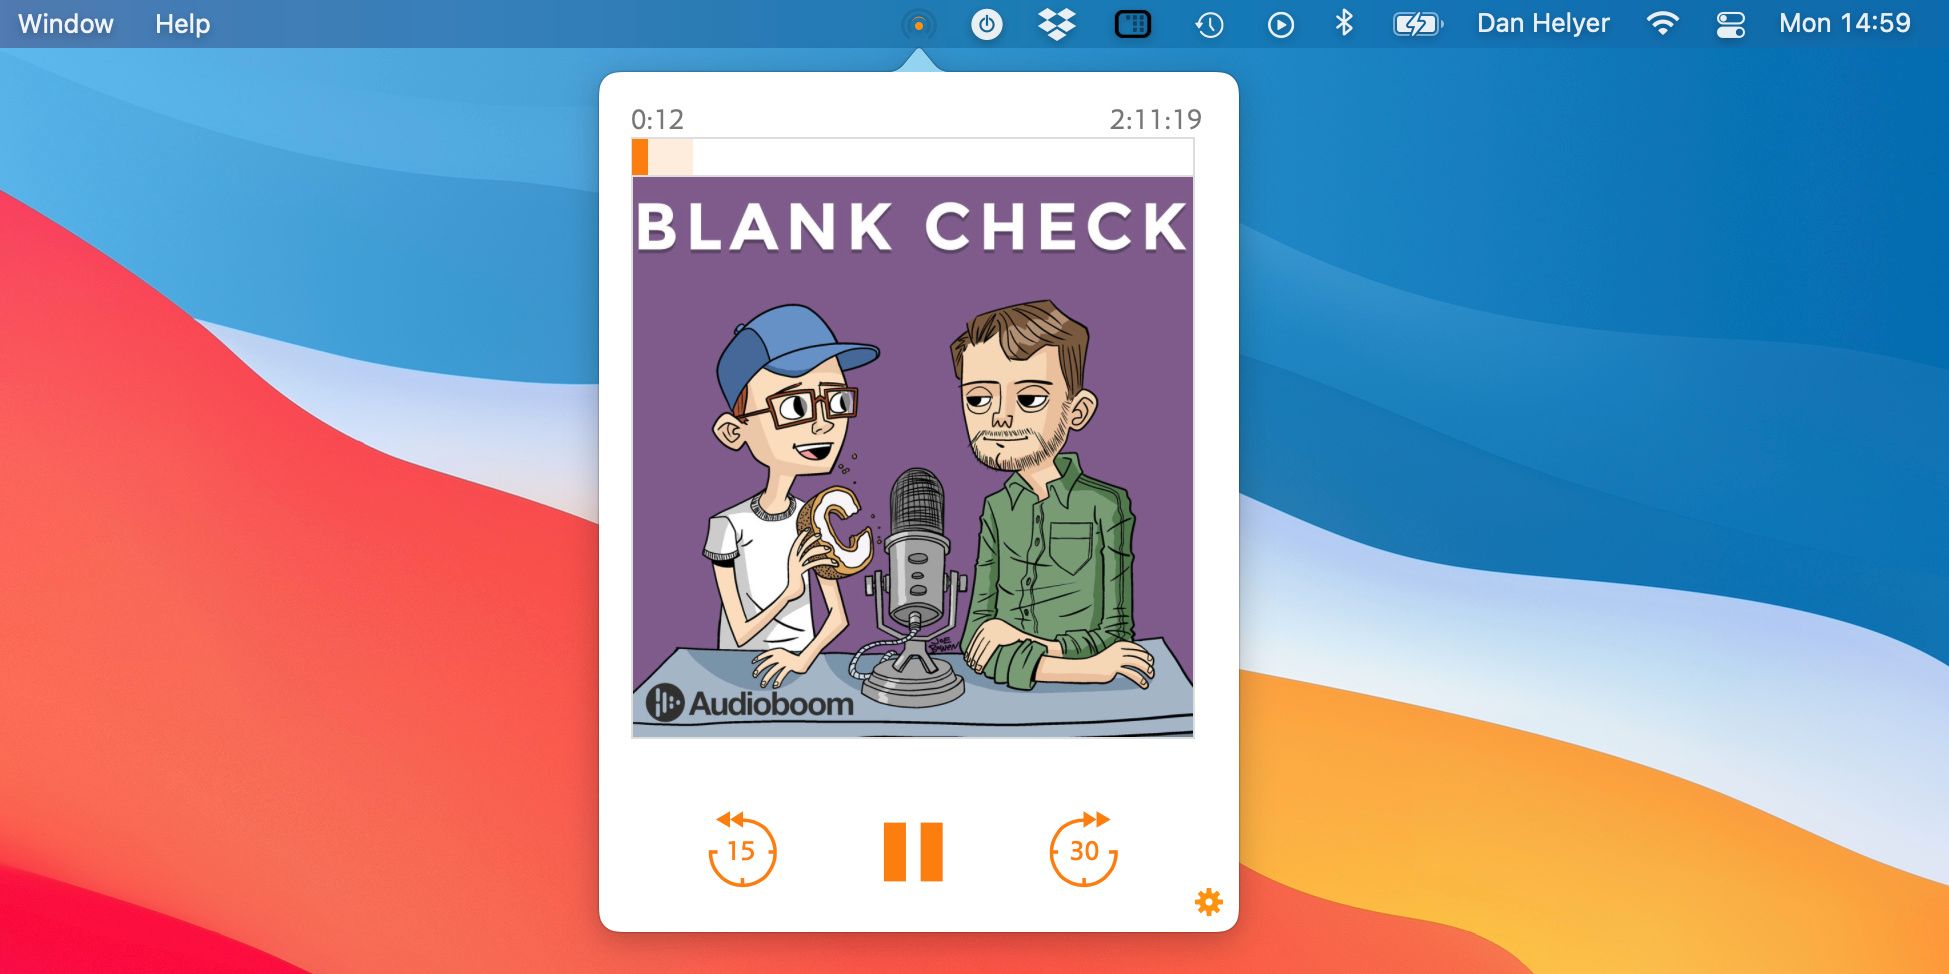 Overcast PodcastMenu menu bar app on Mac - Qual è la migliore app per ascoltare i podcast su un Mac?